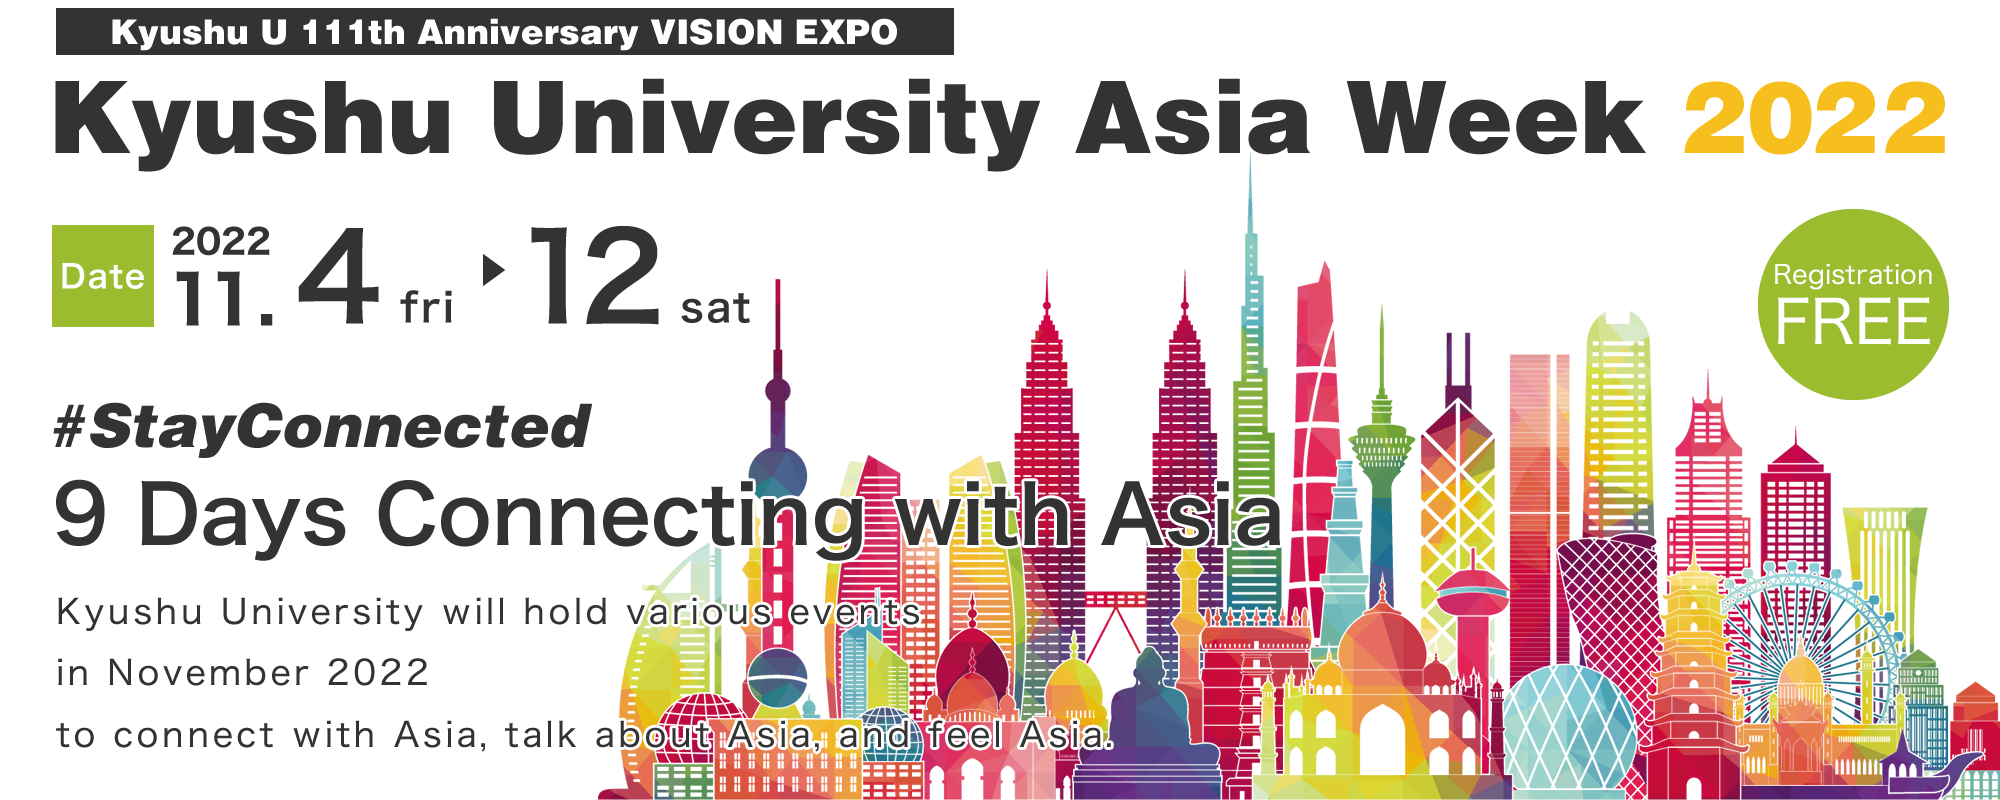 Kyushu University Asia Week 2022